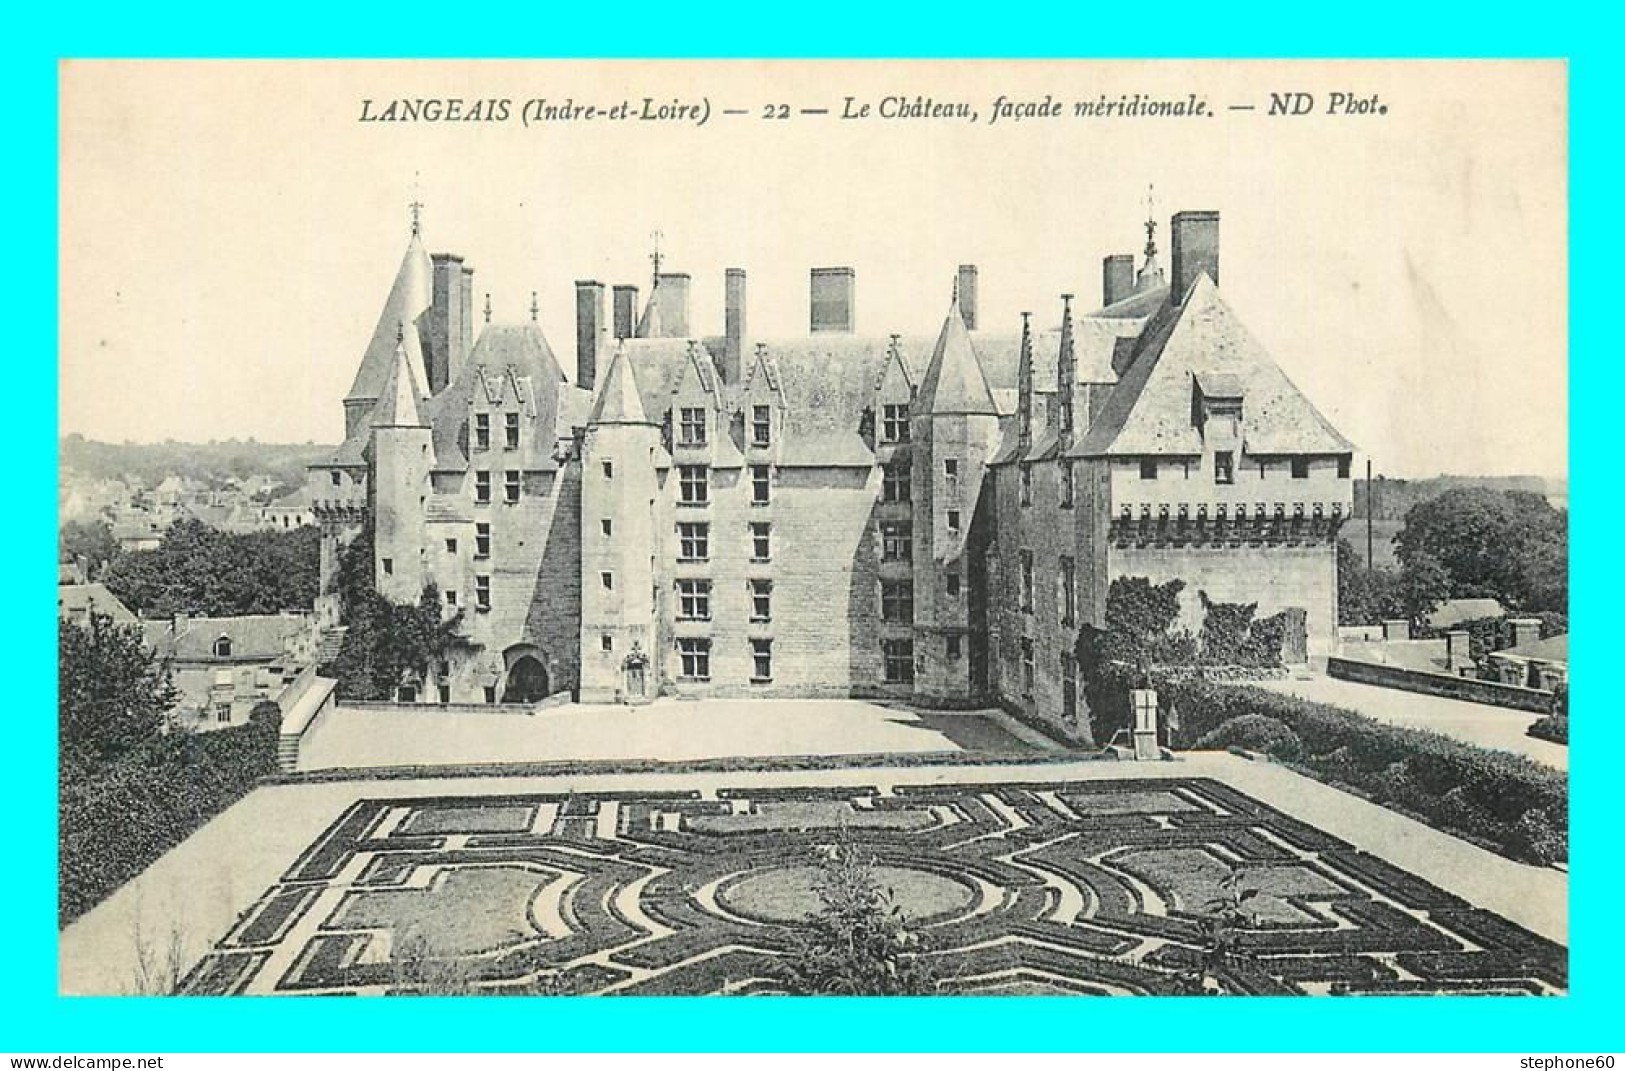 A868 / 315 37 - LANGEAIS Chateau Facade Méridionnale - Langeais